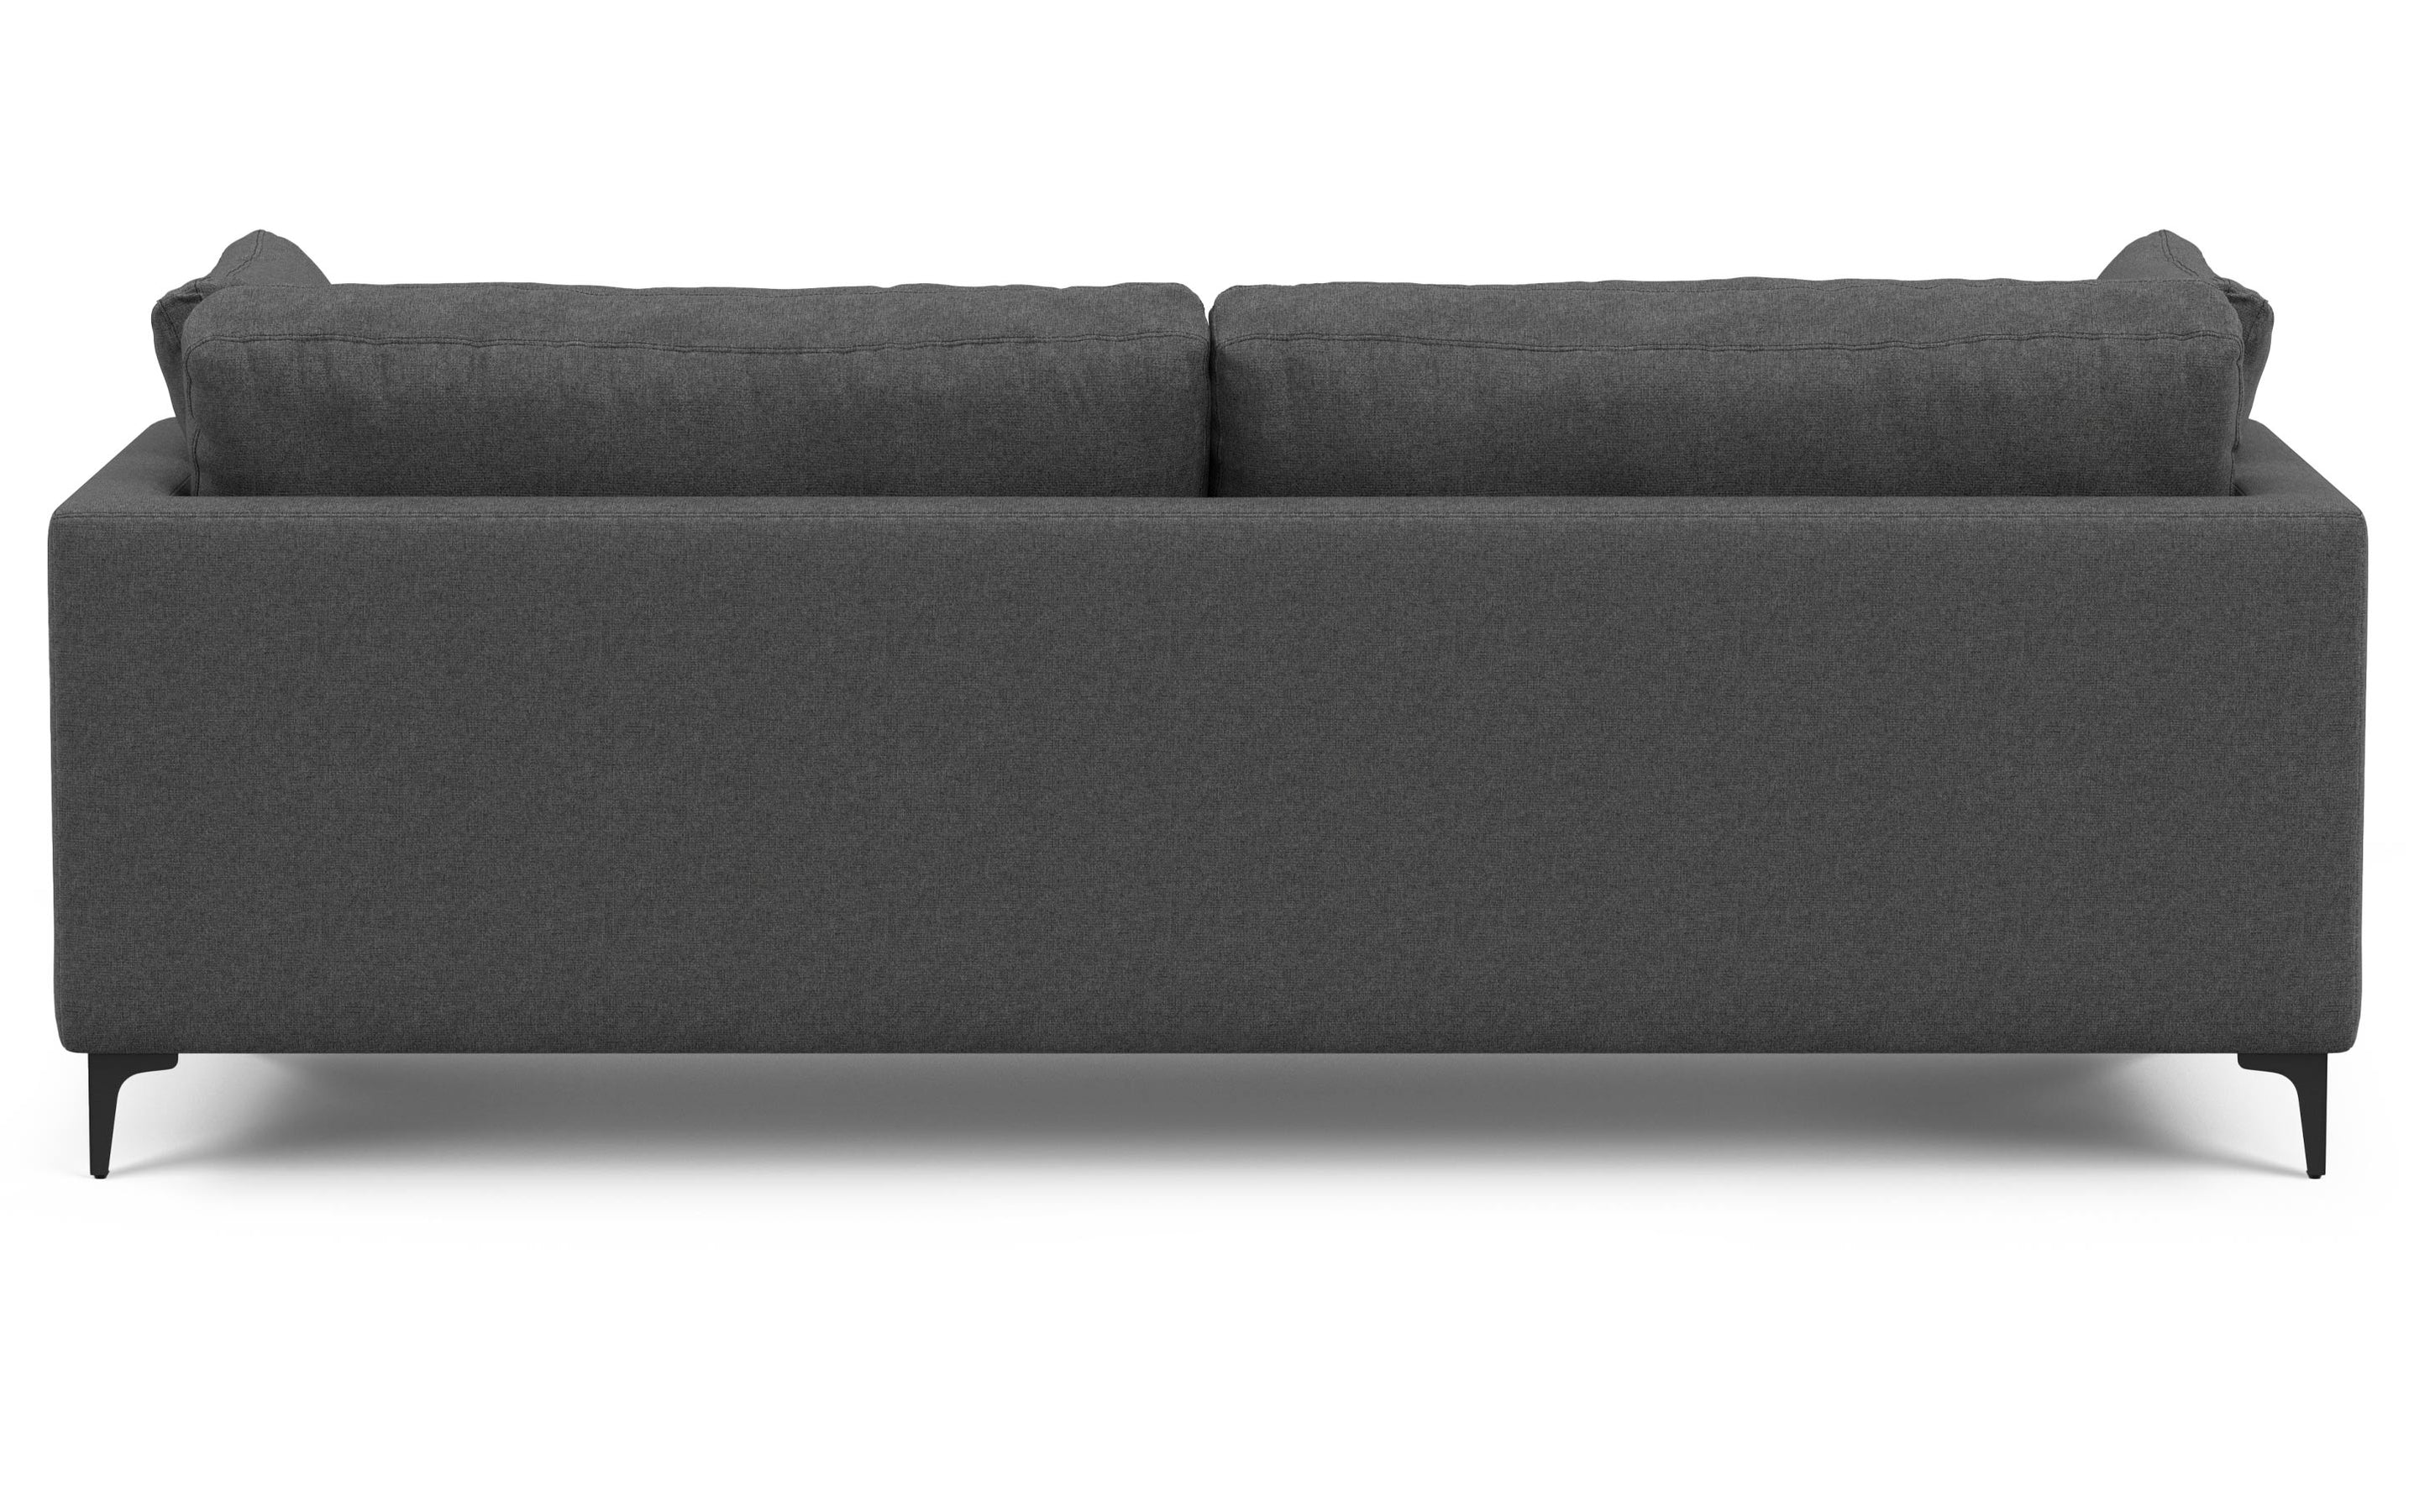 Pebble Grey Performance Fabric | Ava 90 inch Mid Century Sofa with Ottoman Set